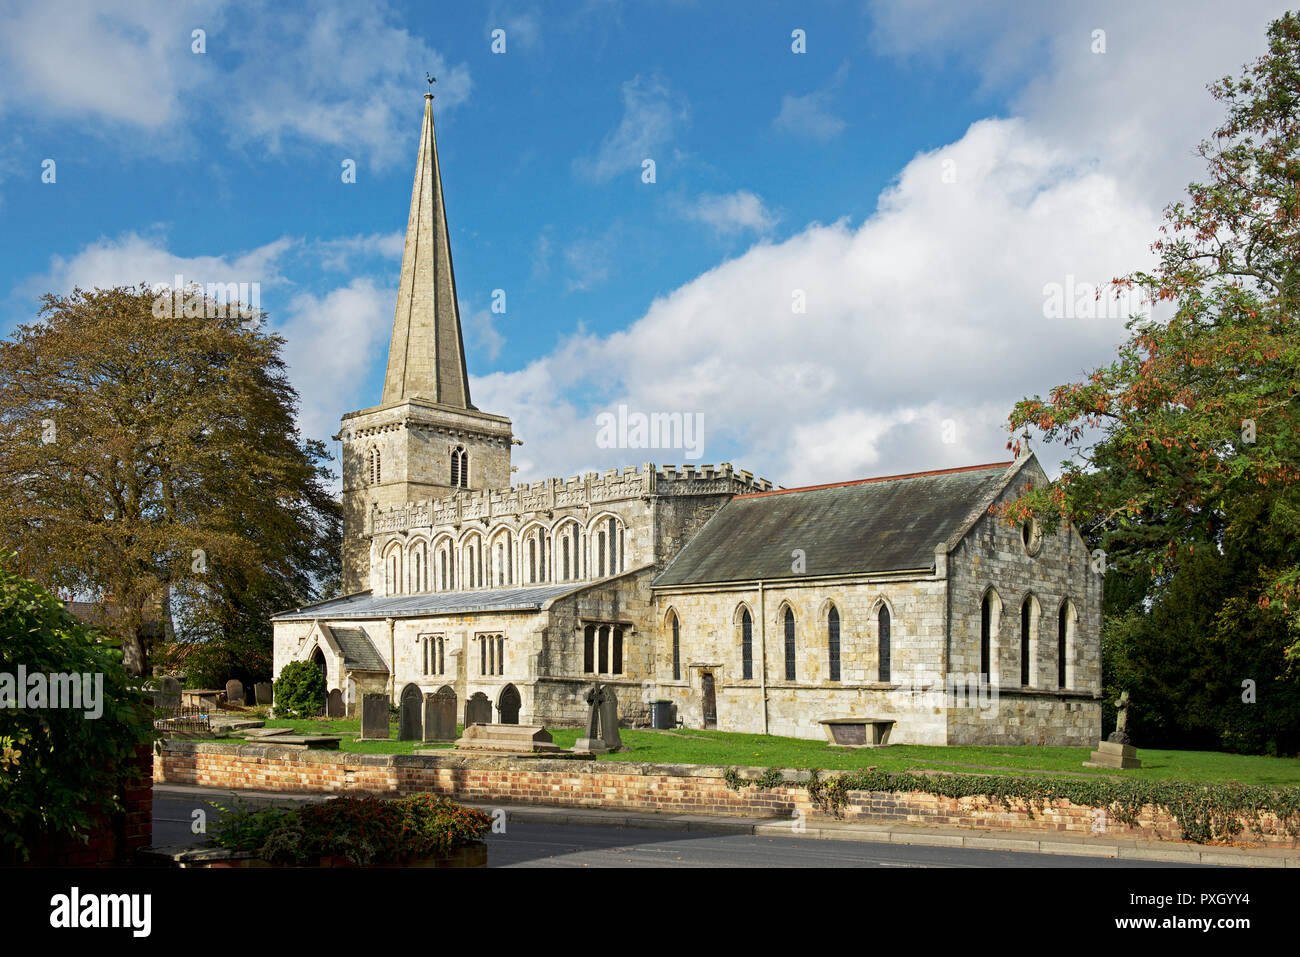 The Parish Church of St Peter & St Paul, Drax village, North Yorkshire, England UK Stock Photo